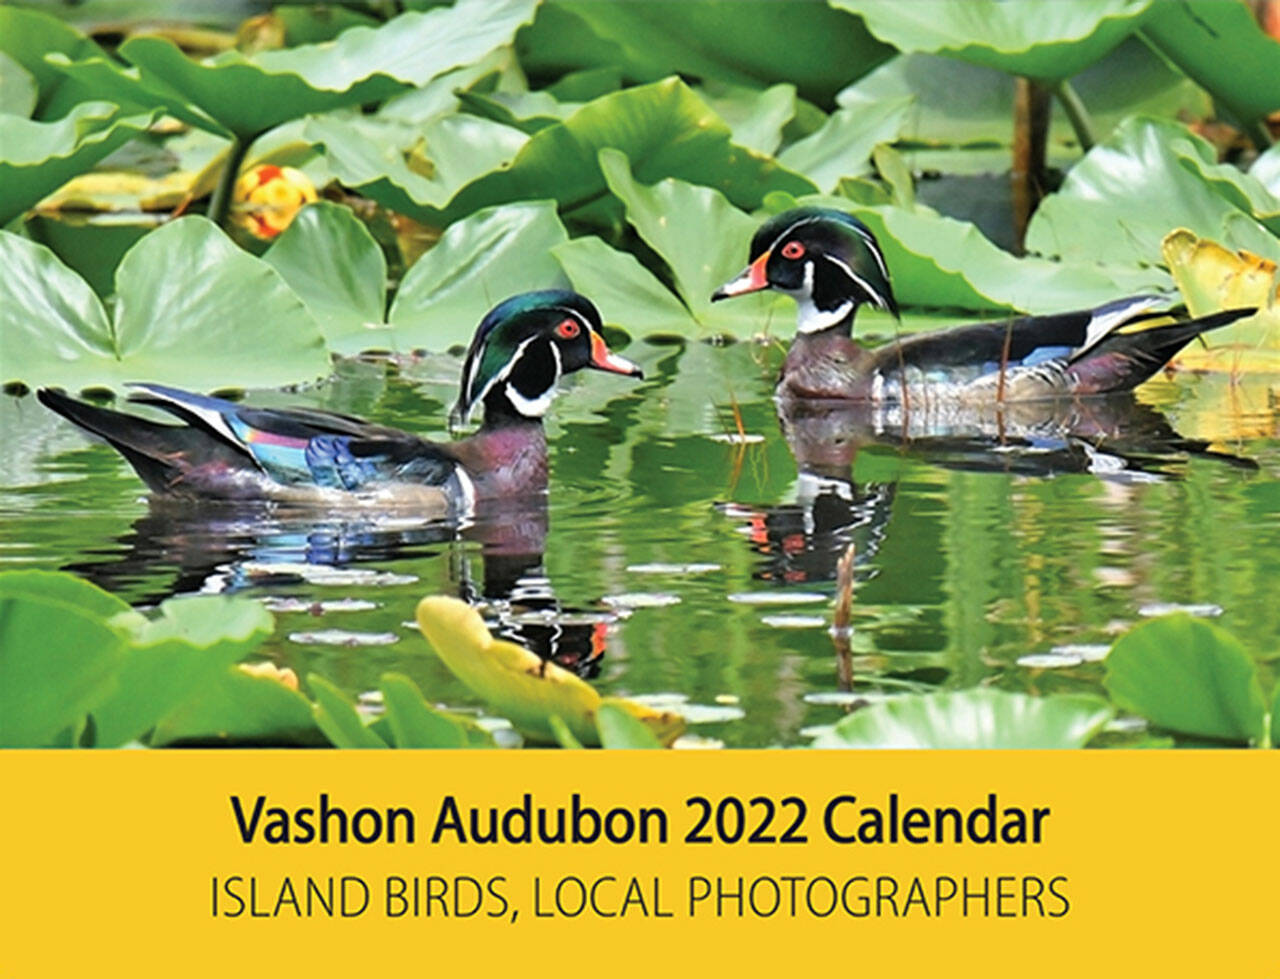 (Jim Diers Photo) Islander Jim Diers took the cover photograph for Vashon Audubon’s 2022 calendar, now on sale.